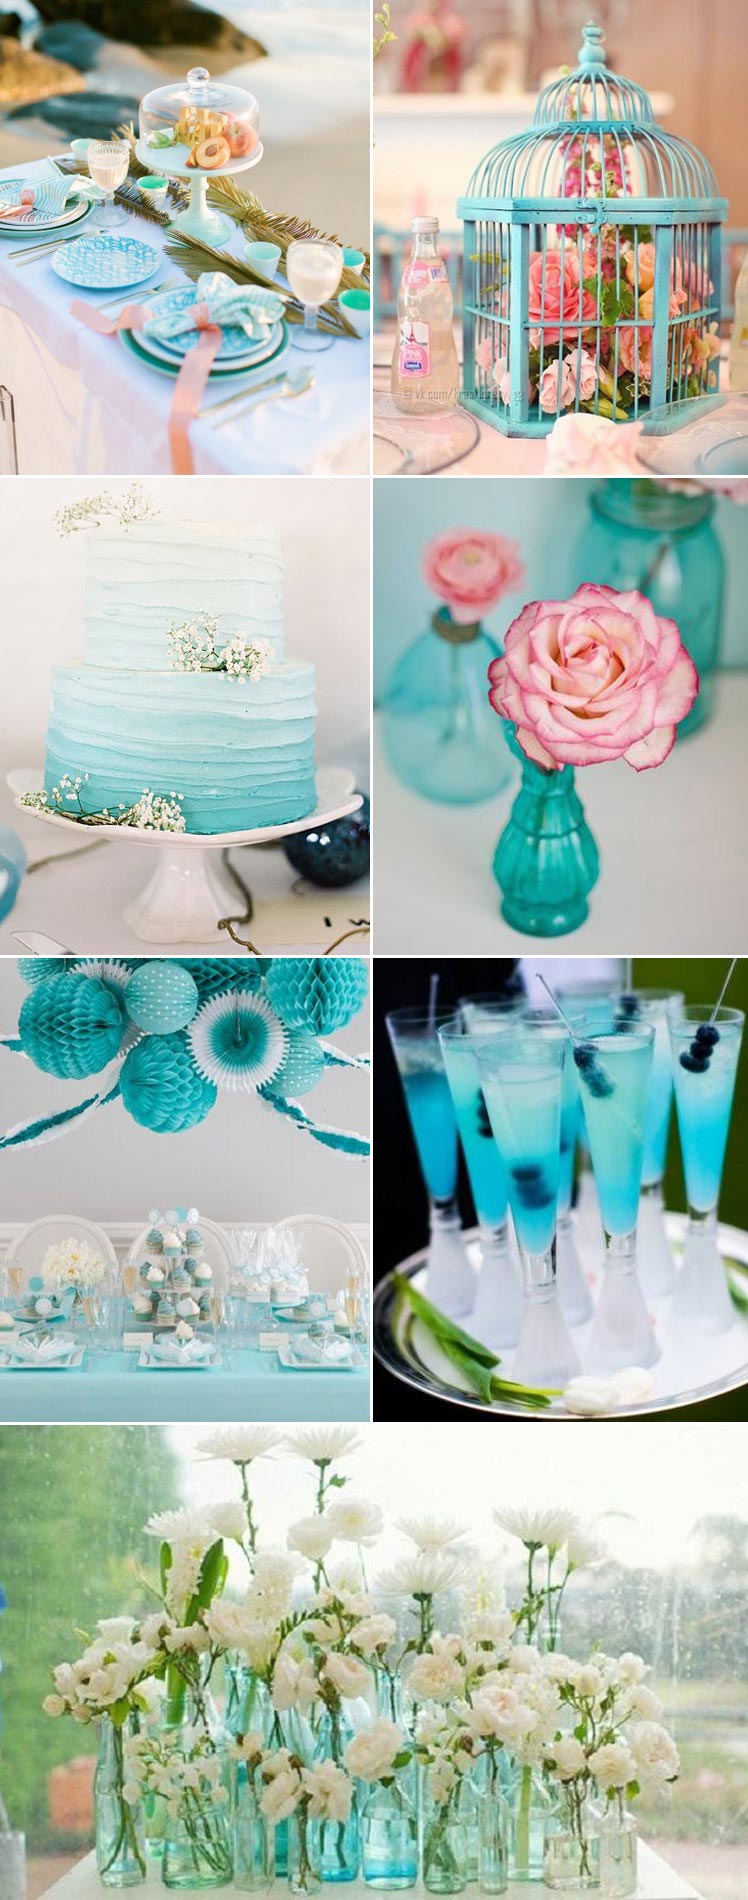 Inspiration for an aquamarine wedding colour scheme